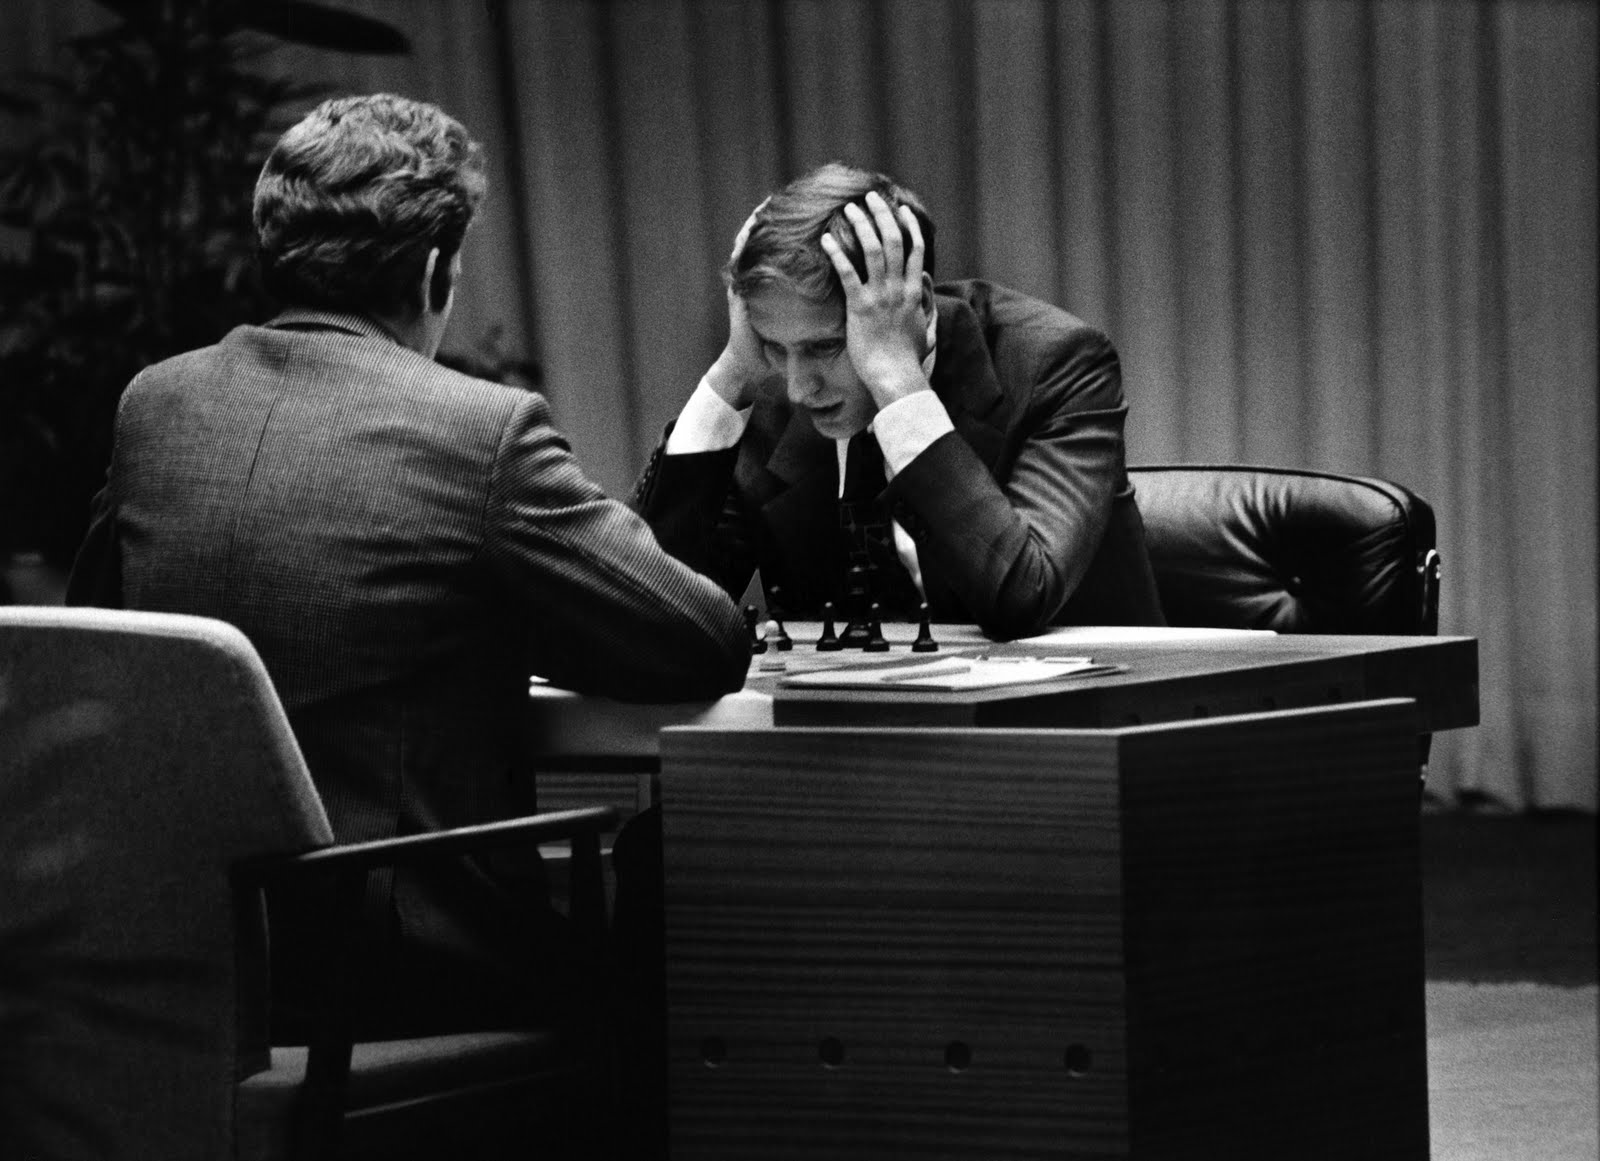 Bobby Fischer Dismantles the Greenblatt Computer 